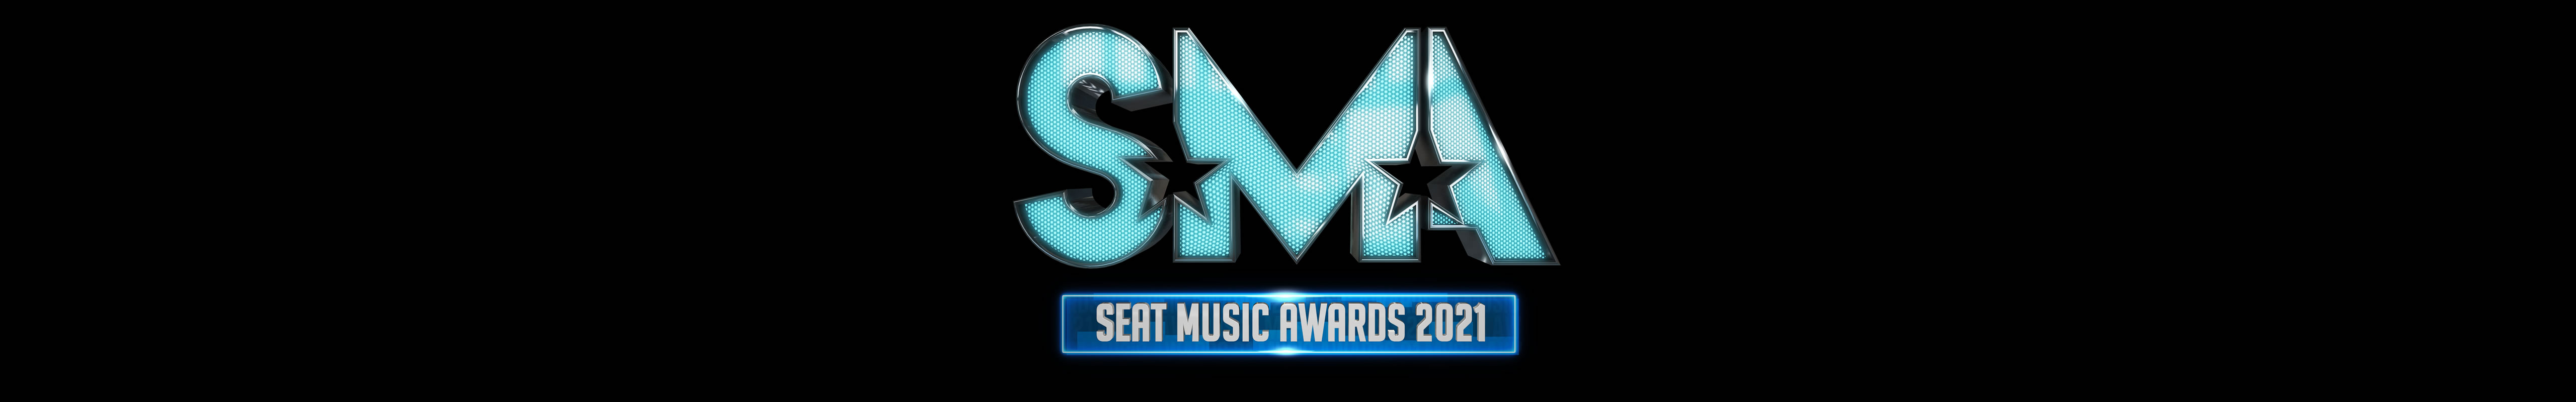 SEAT torna a cantare con i MUSIC AWARDS 2021